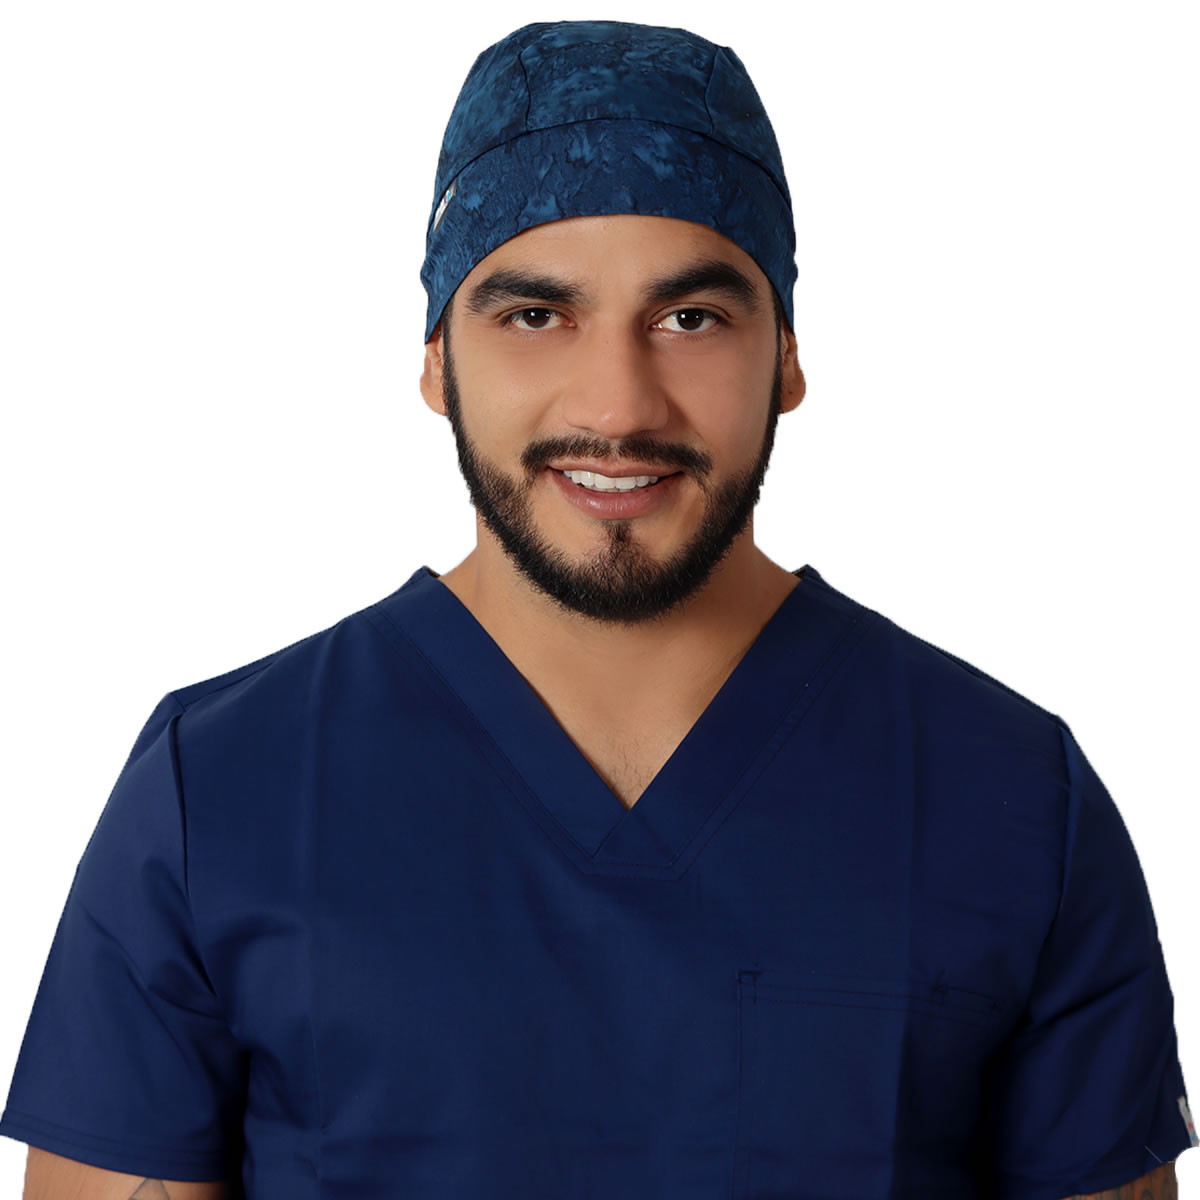 Gorro médico Hombre Algodón Azul Oscuro marca Health Company HC_HEALT_AZULO Elite Medical House